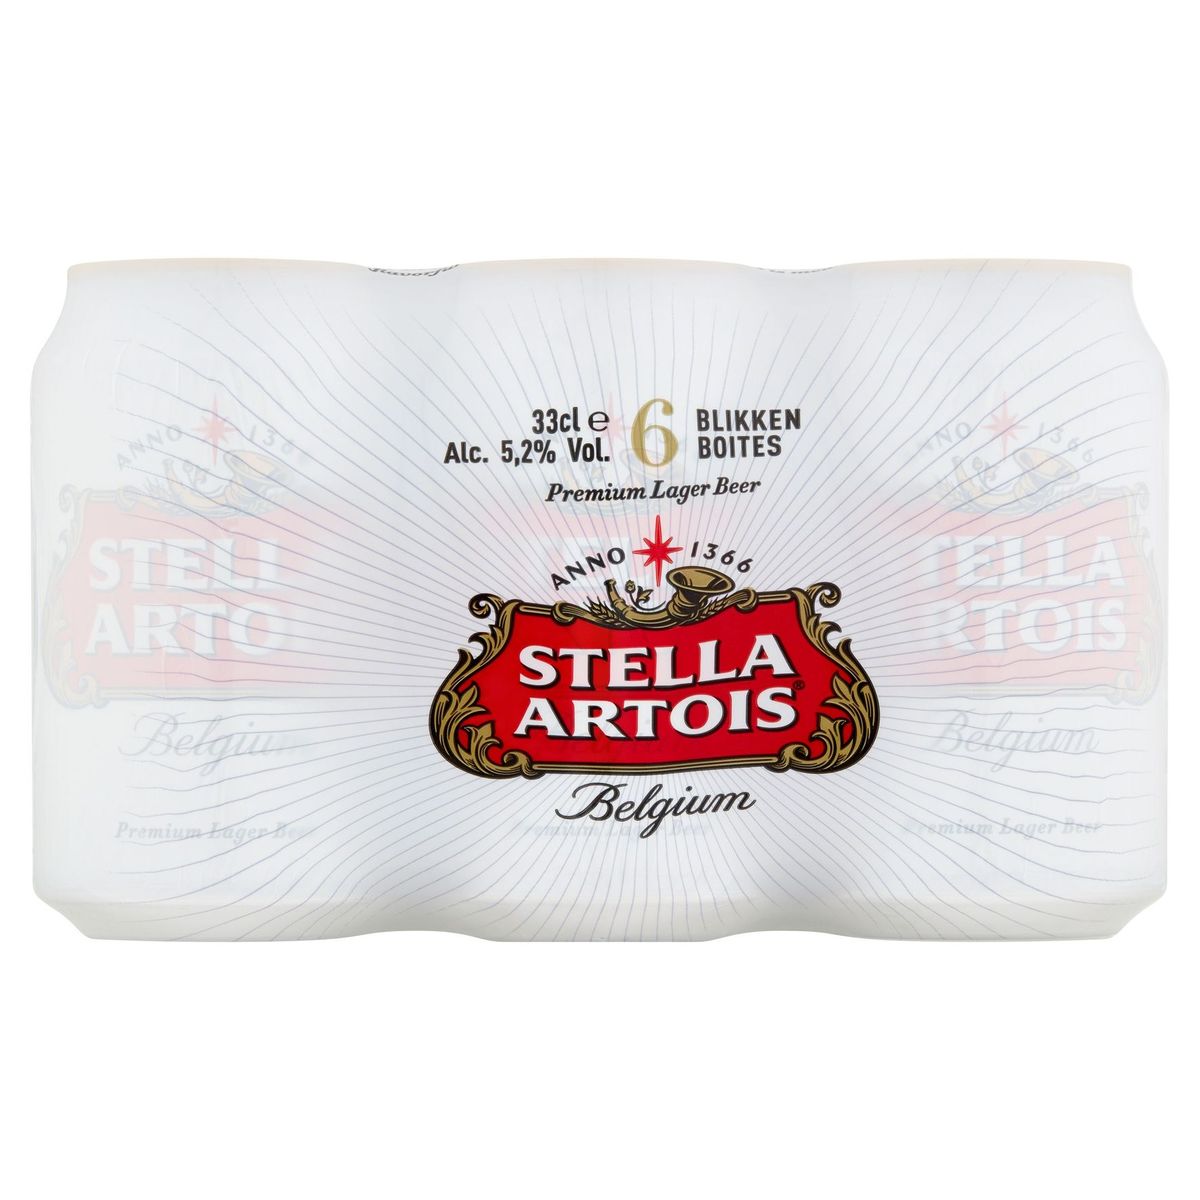 Stella Artois Belgium Premium Lager Beer Blikken 6 x 33 cl